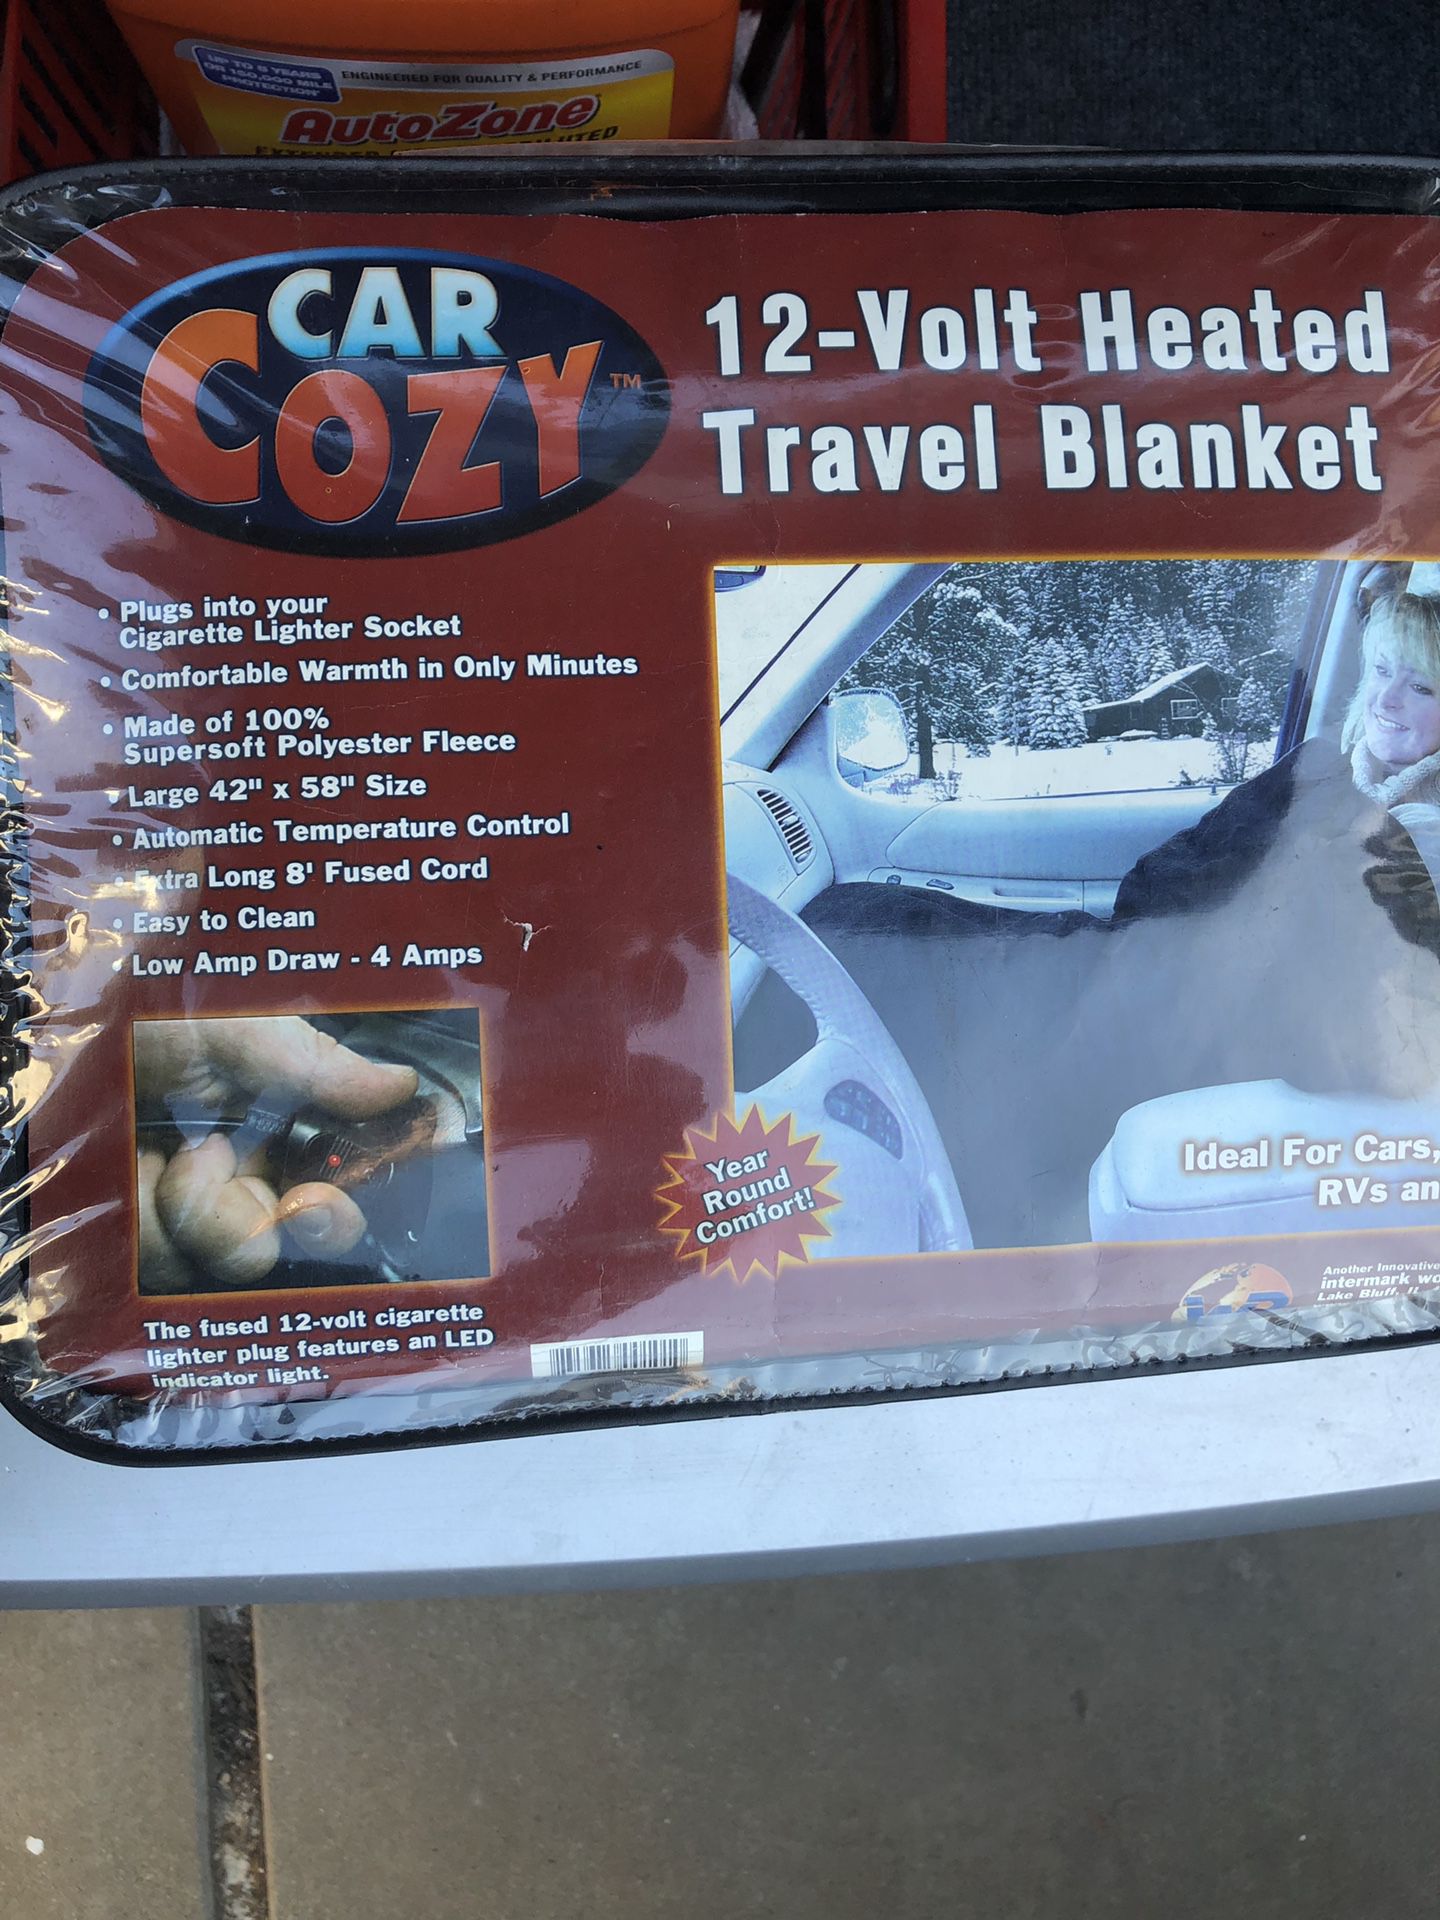 Electric heated car blanket